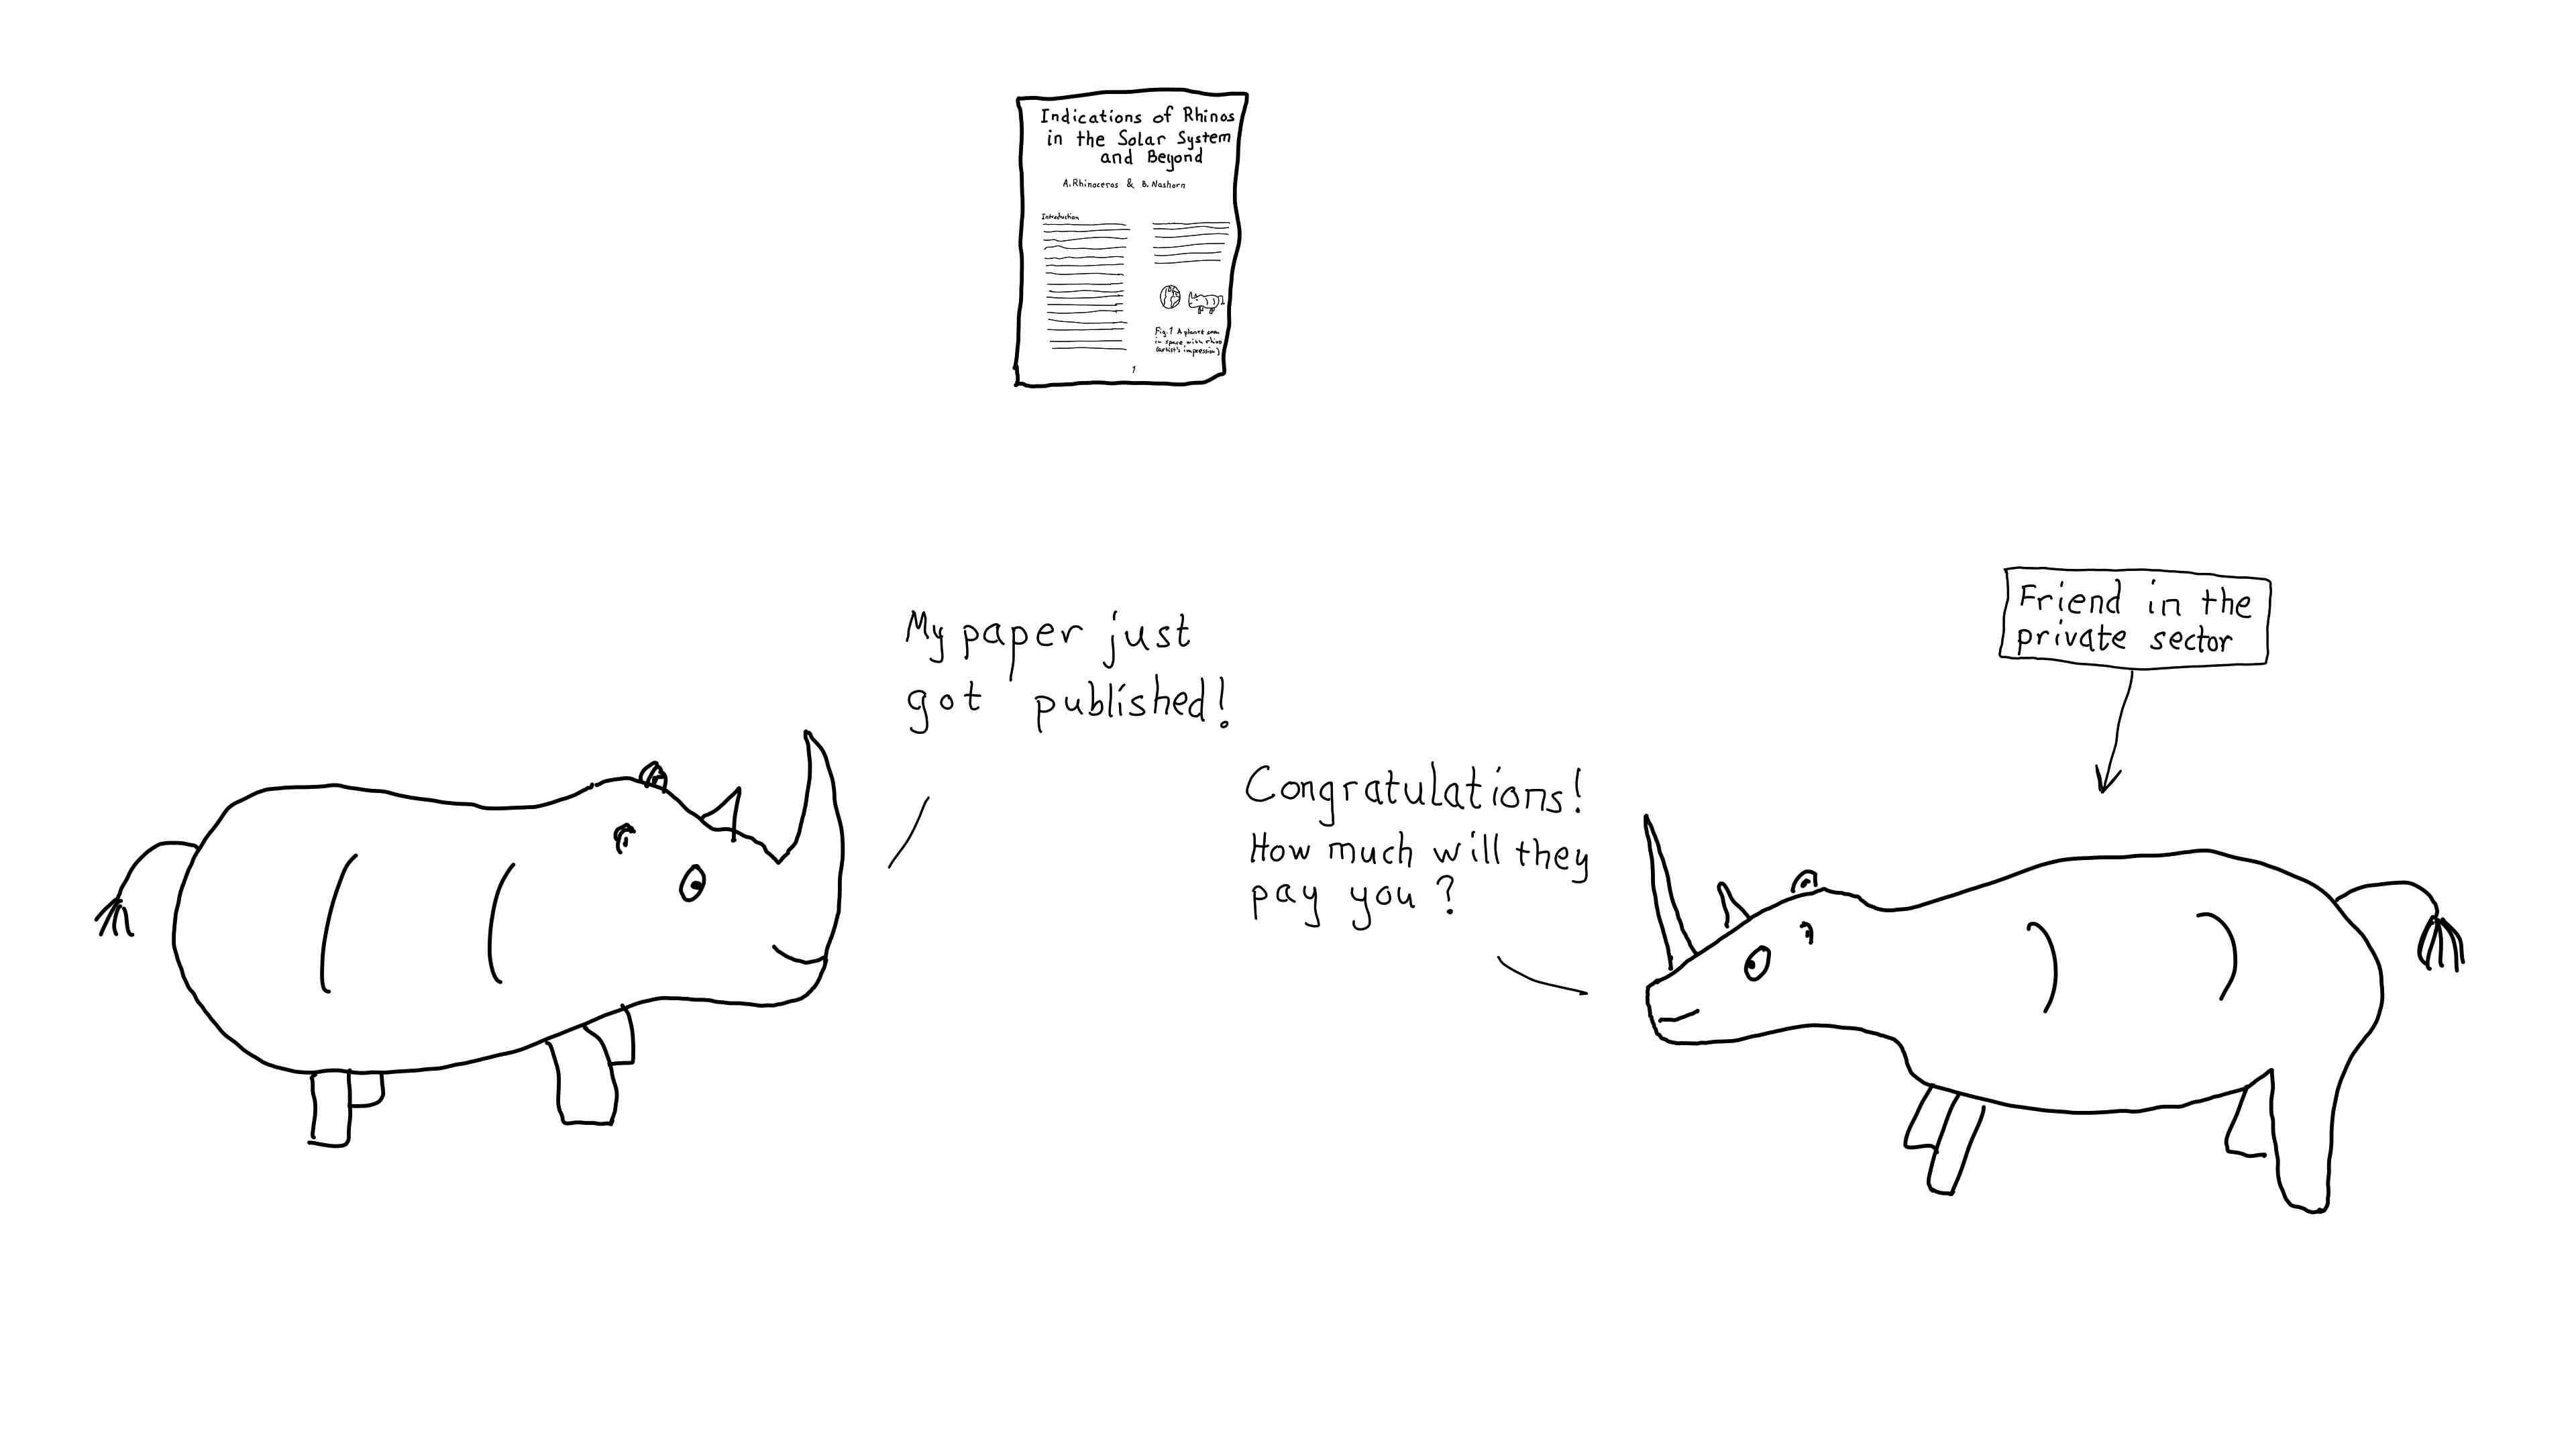 Rhinos talk about academic publishing 1